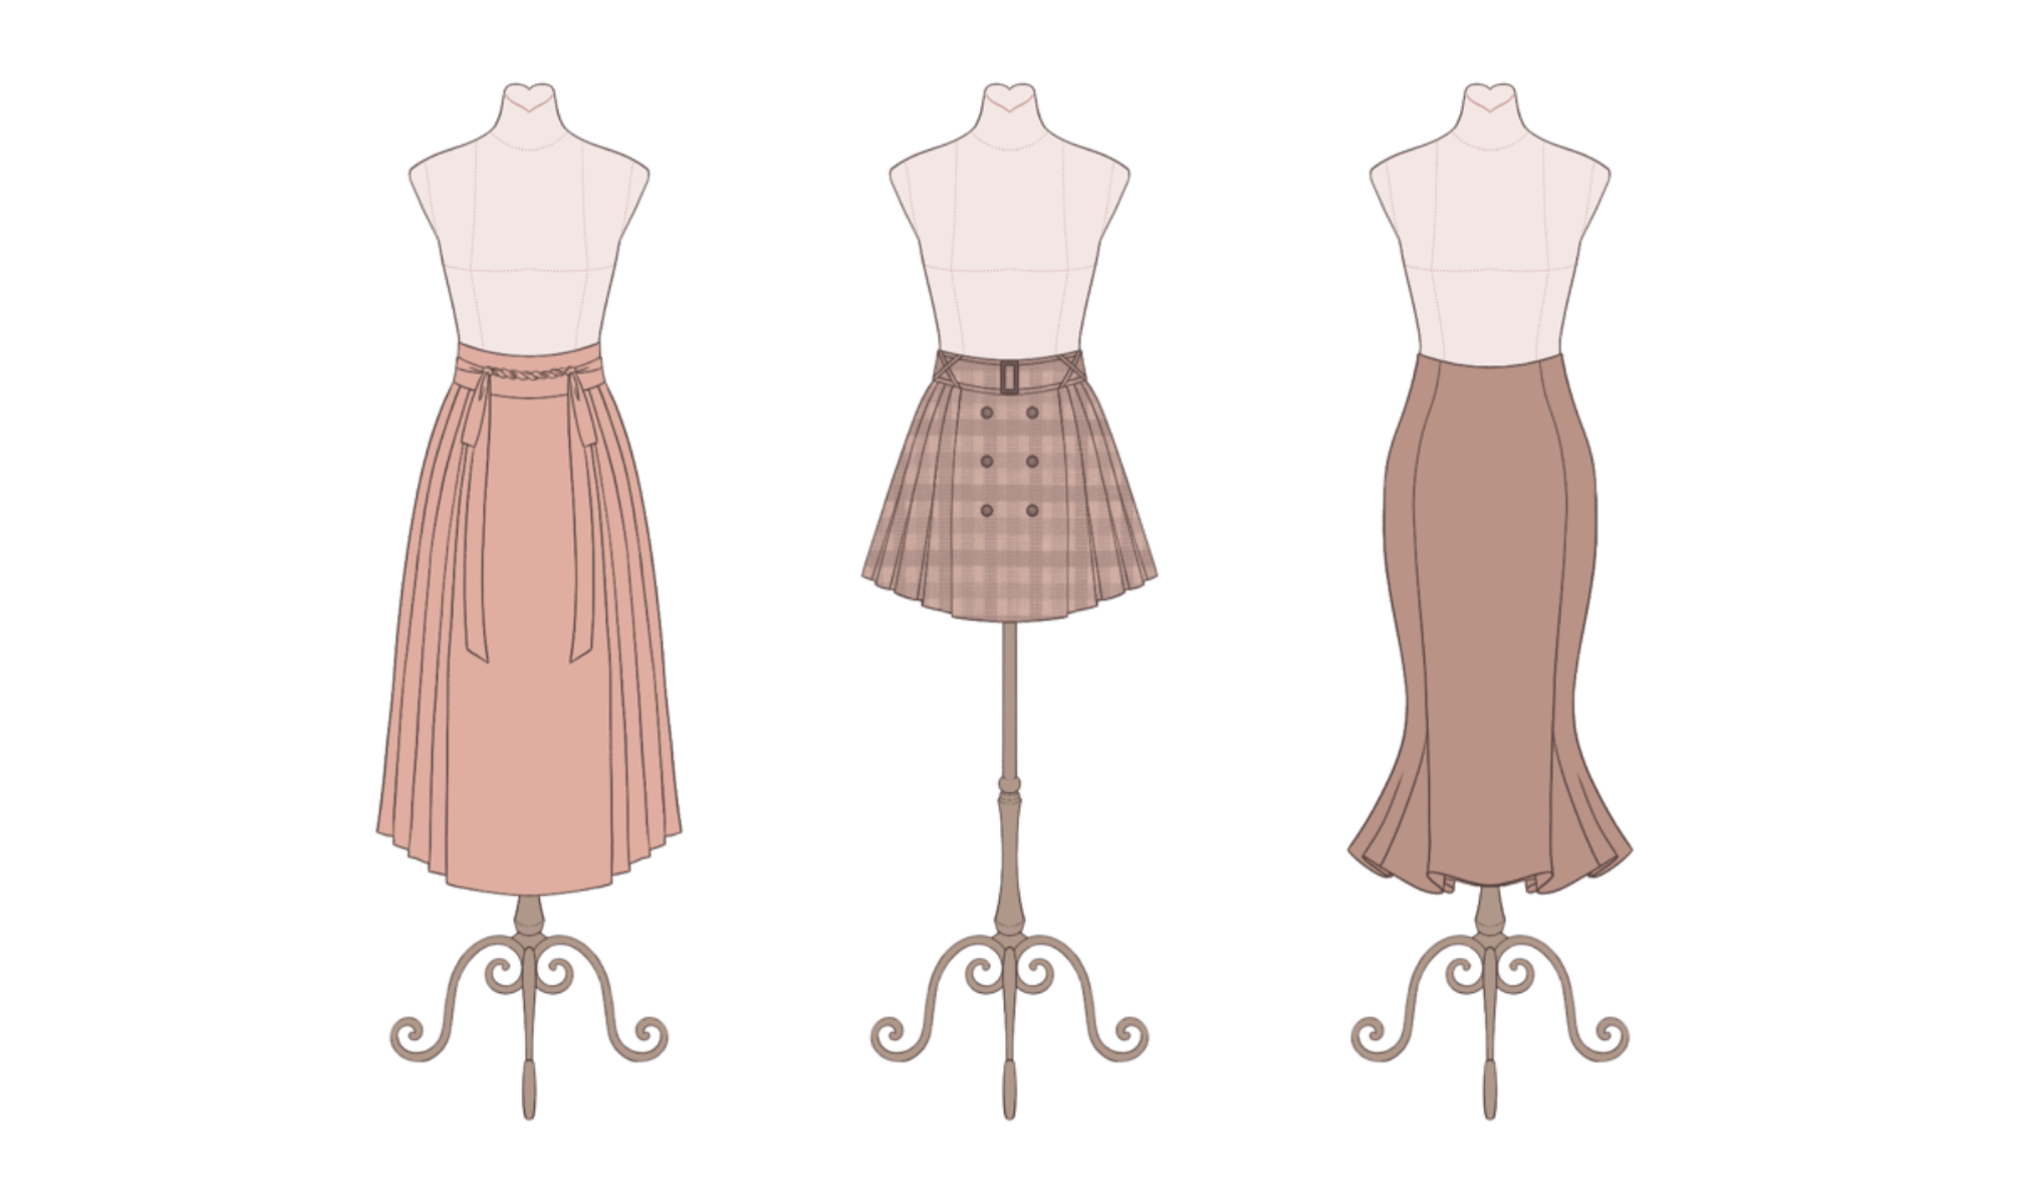 Top three skirt designs